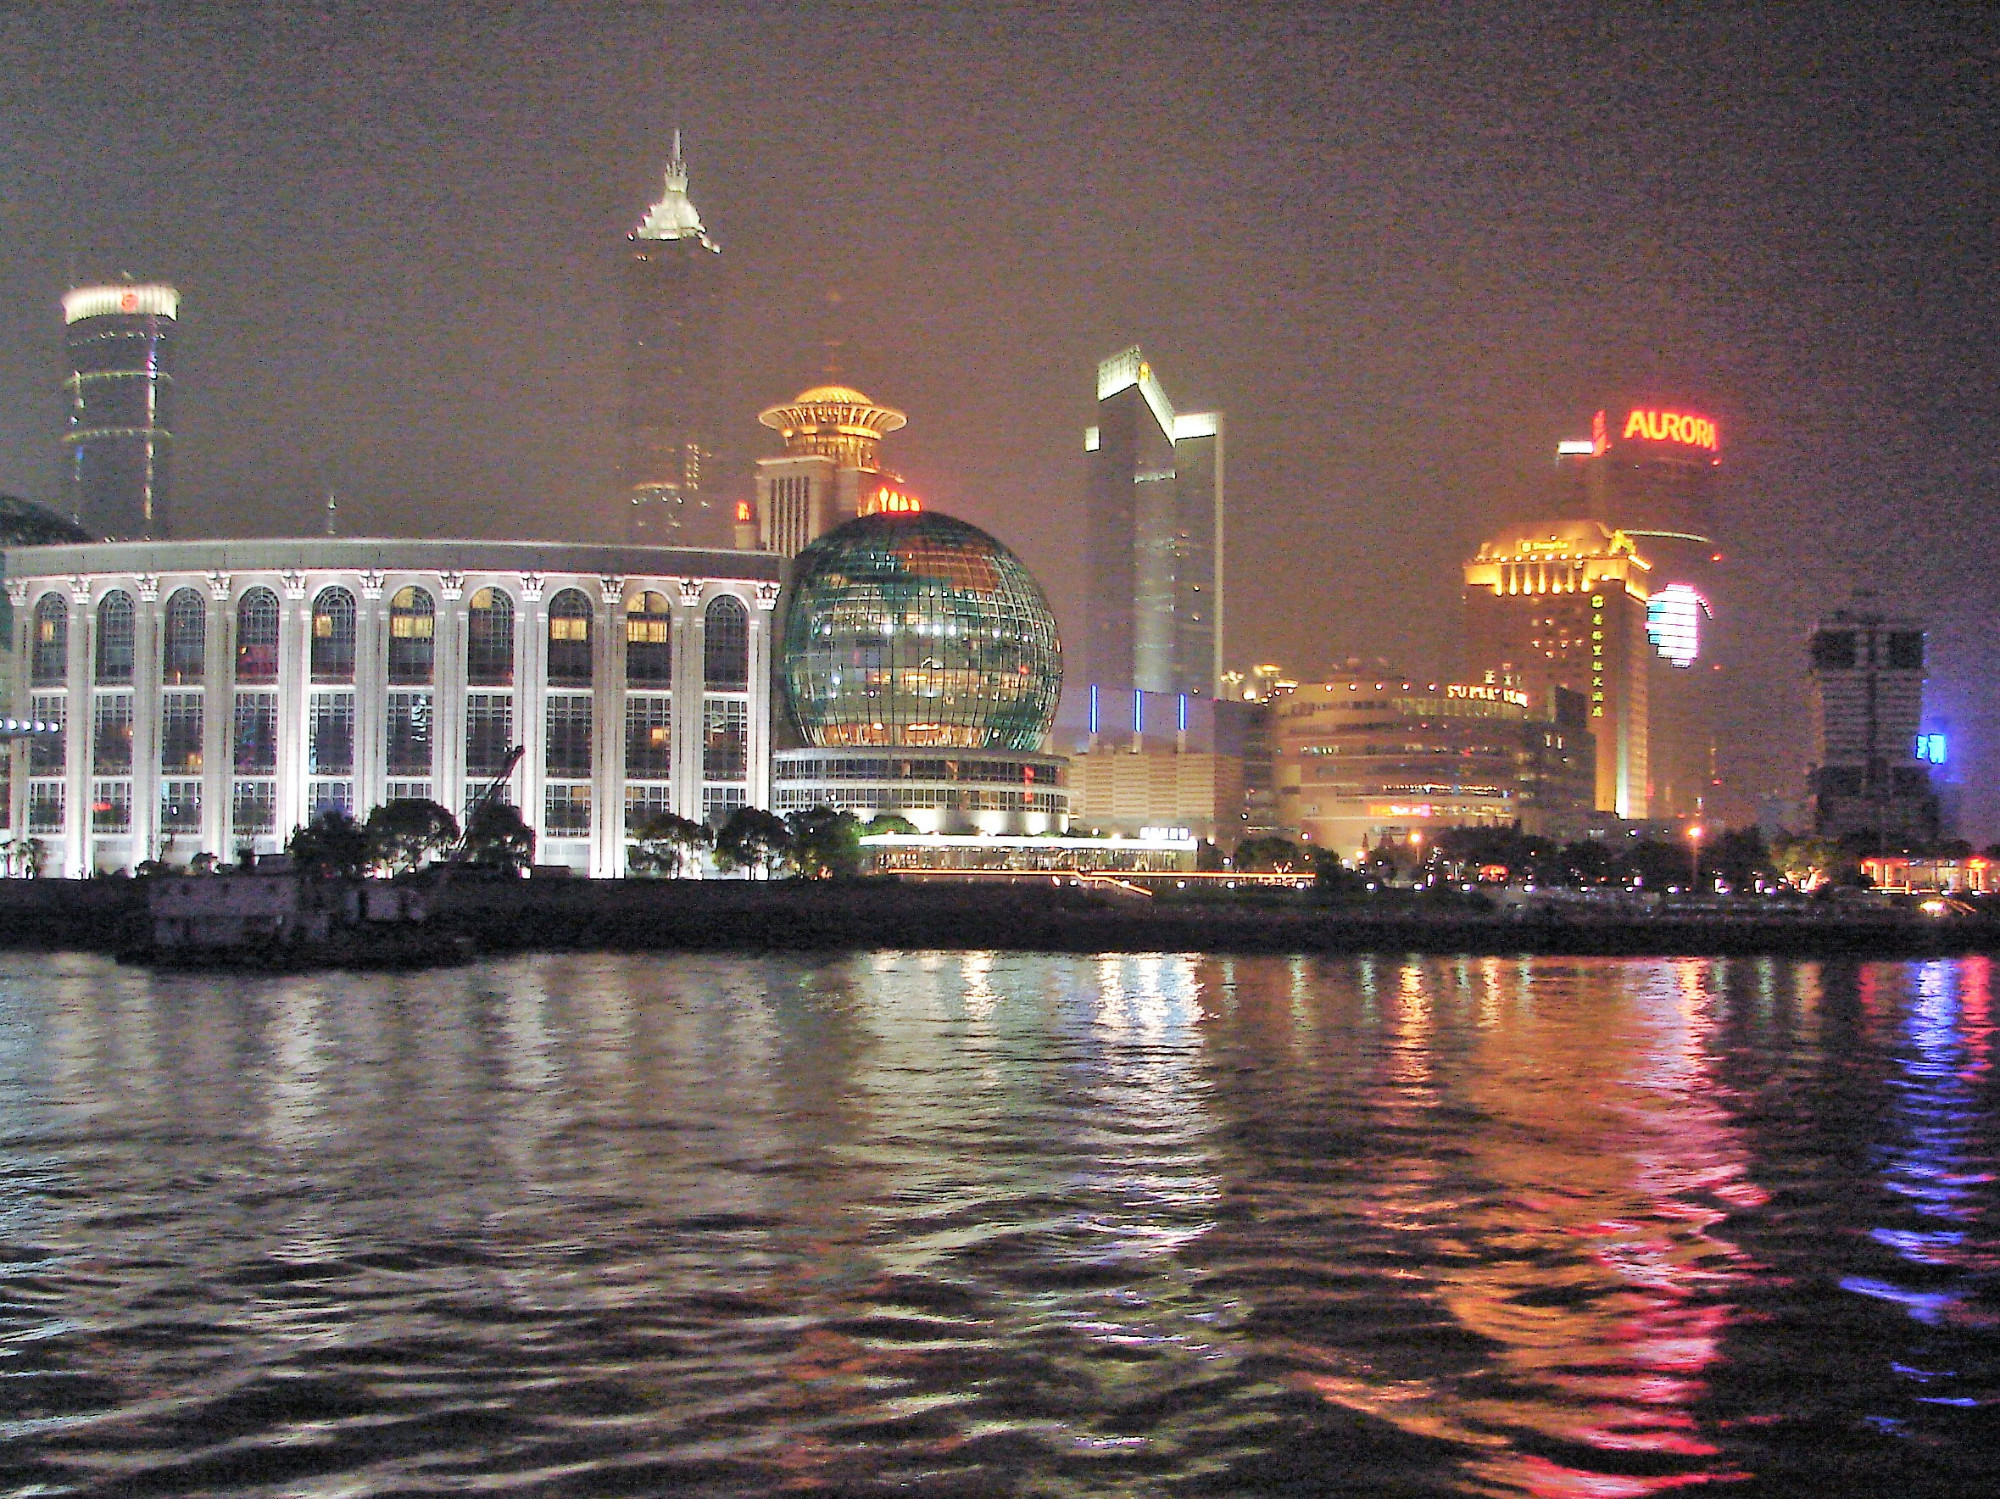 Shanghai International Convention Center by night